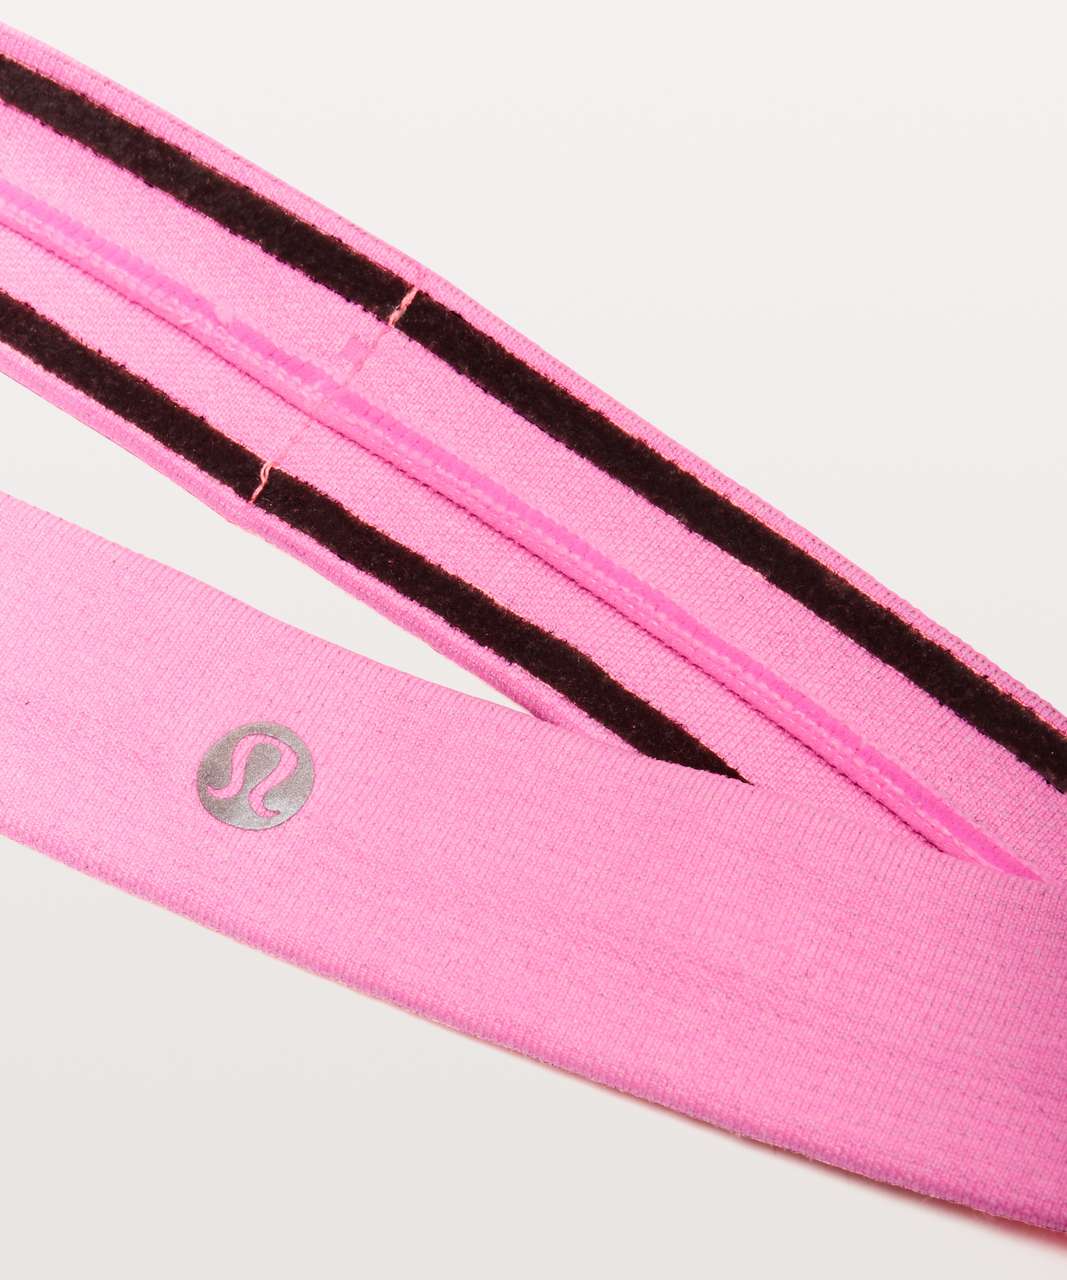 Lululemon Cardio Cross Trainer Headband - Zing Pink Light / White